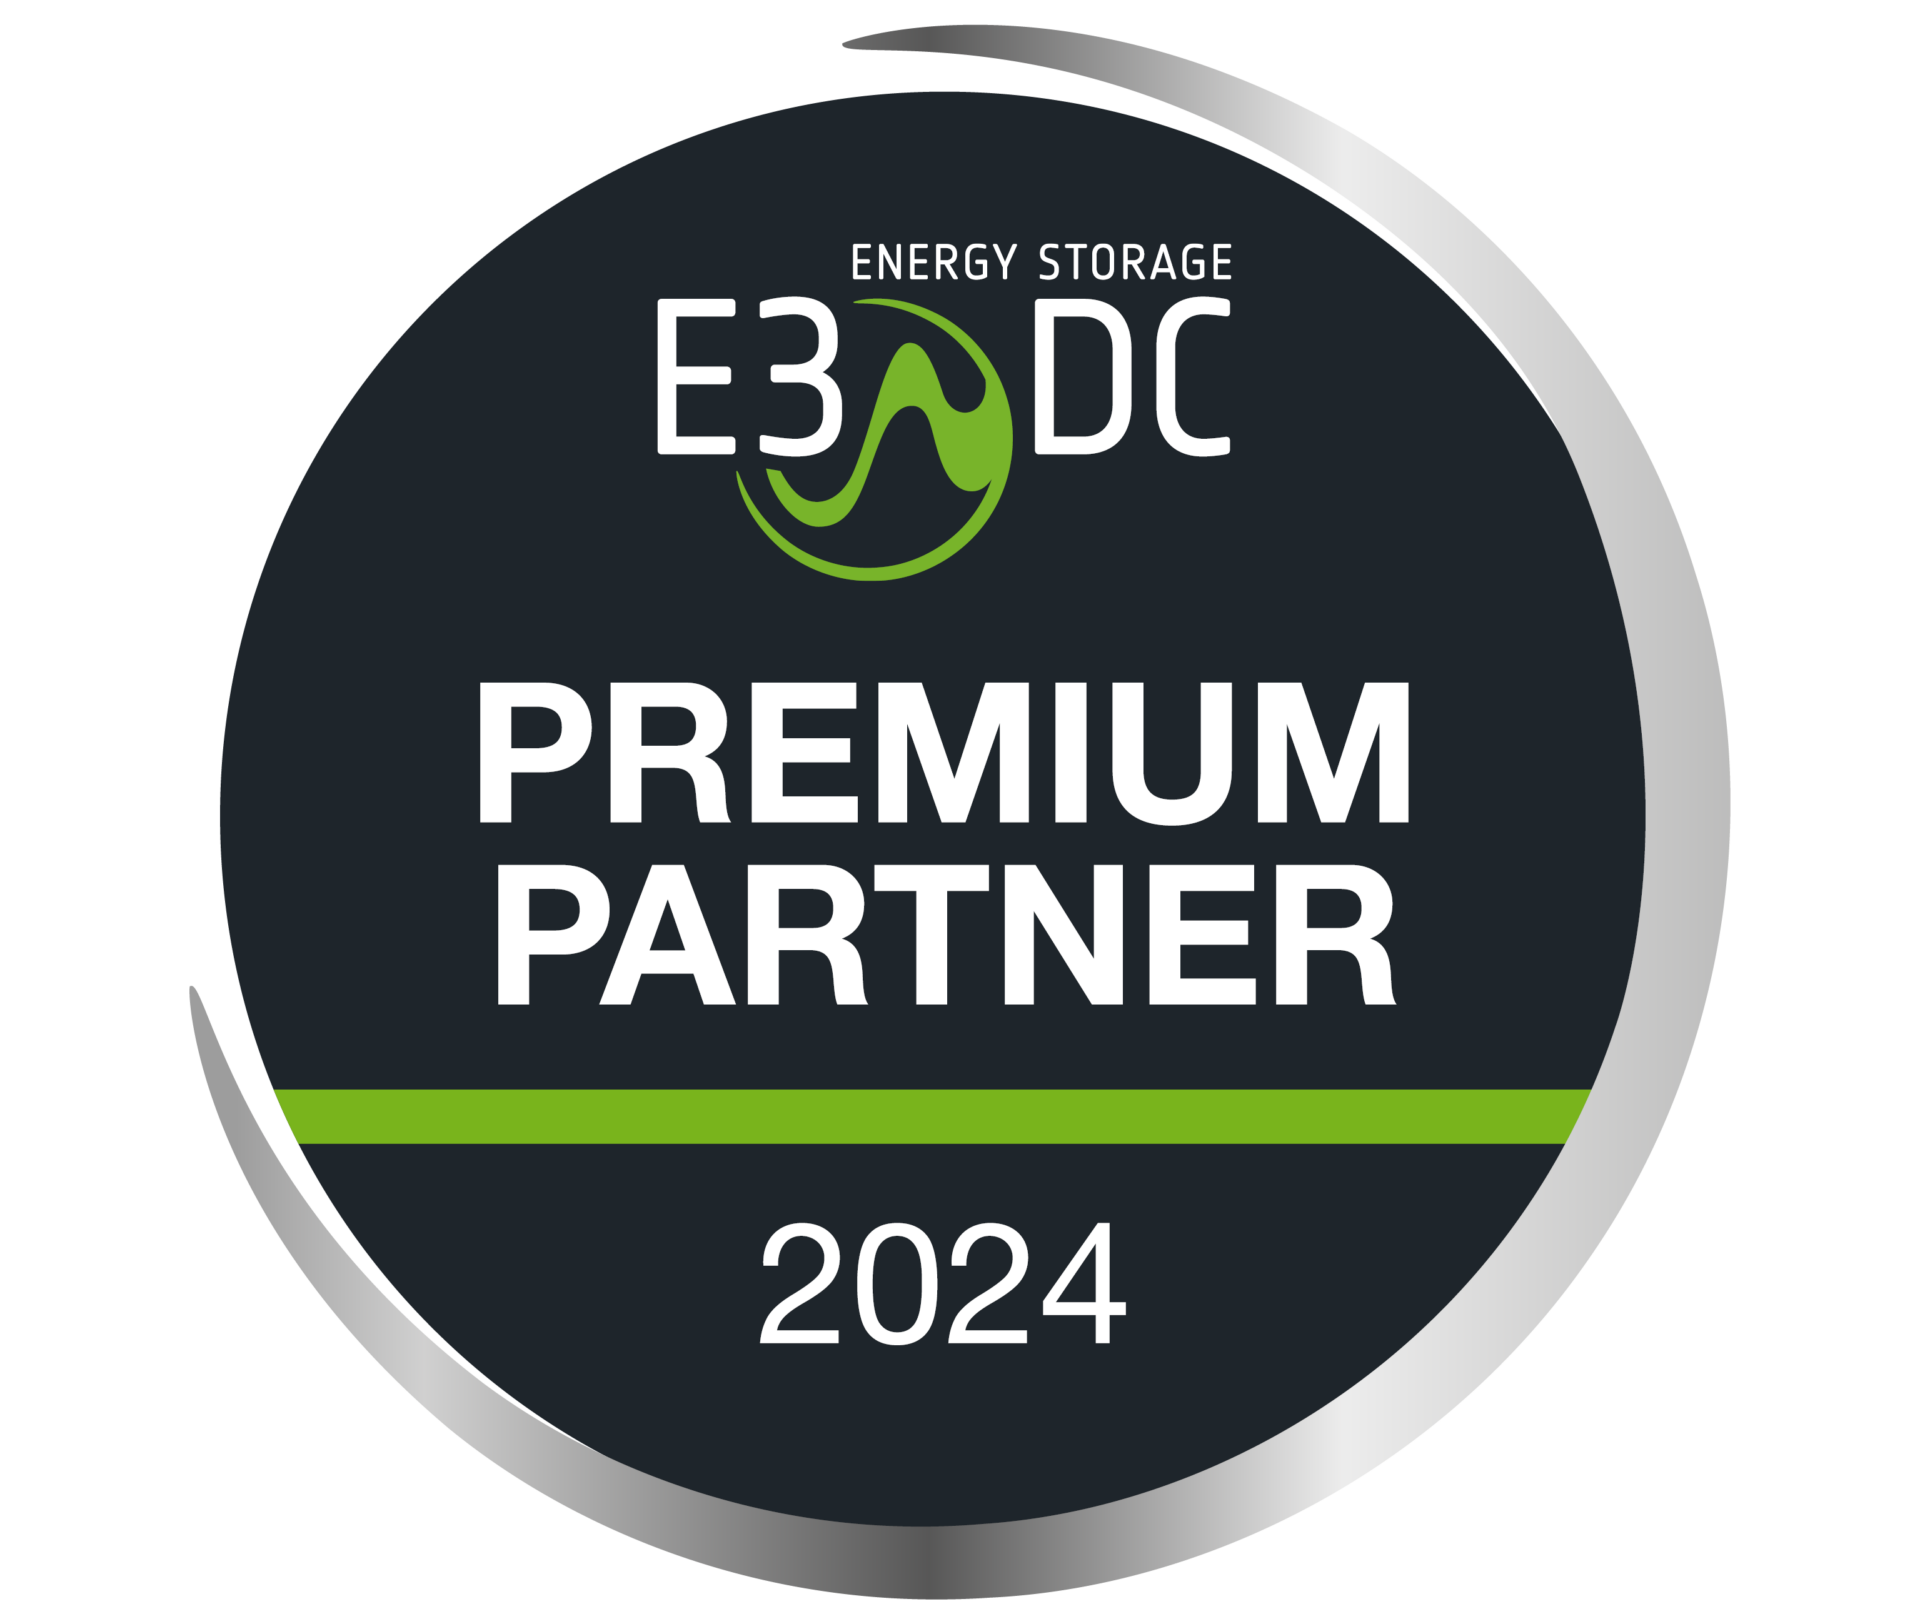 Premium-Partnern von E3/DC